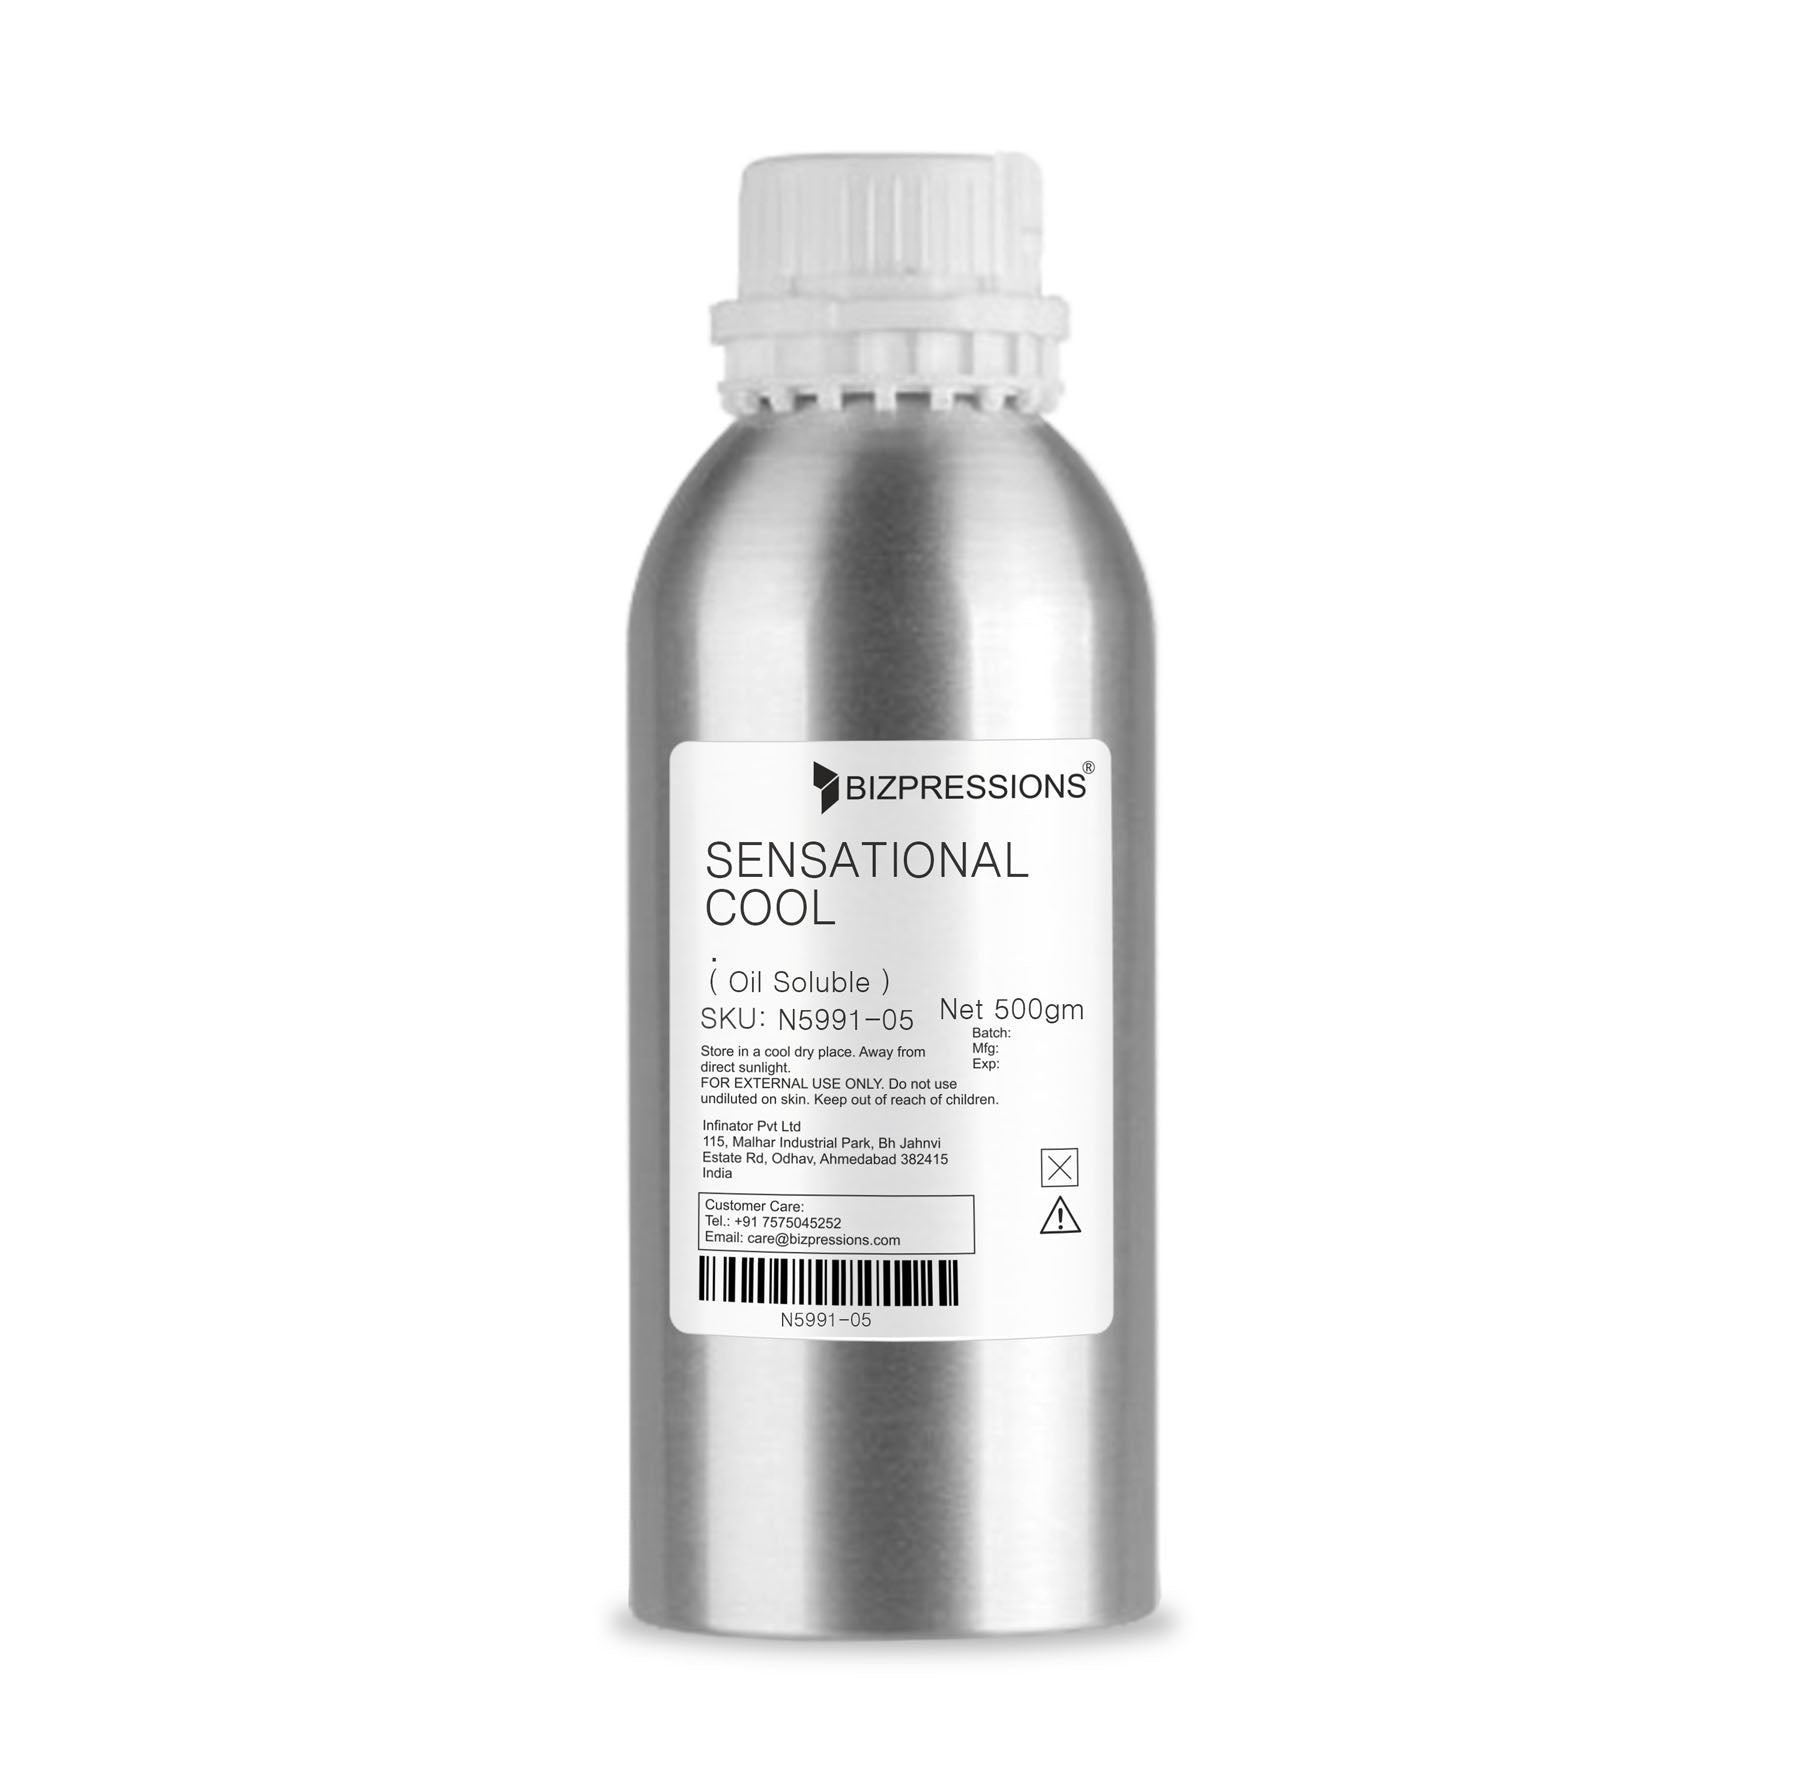 SENSATIONAL COOL - Fragrance ( Oil Soluble ) - 500 gm